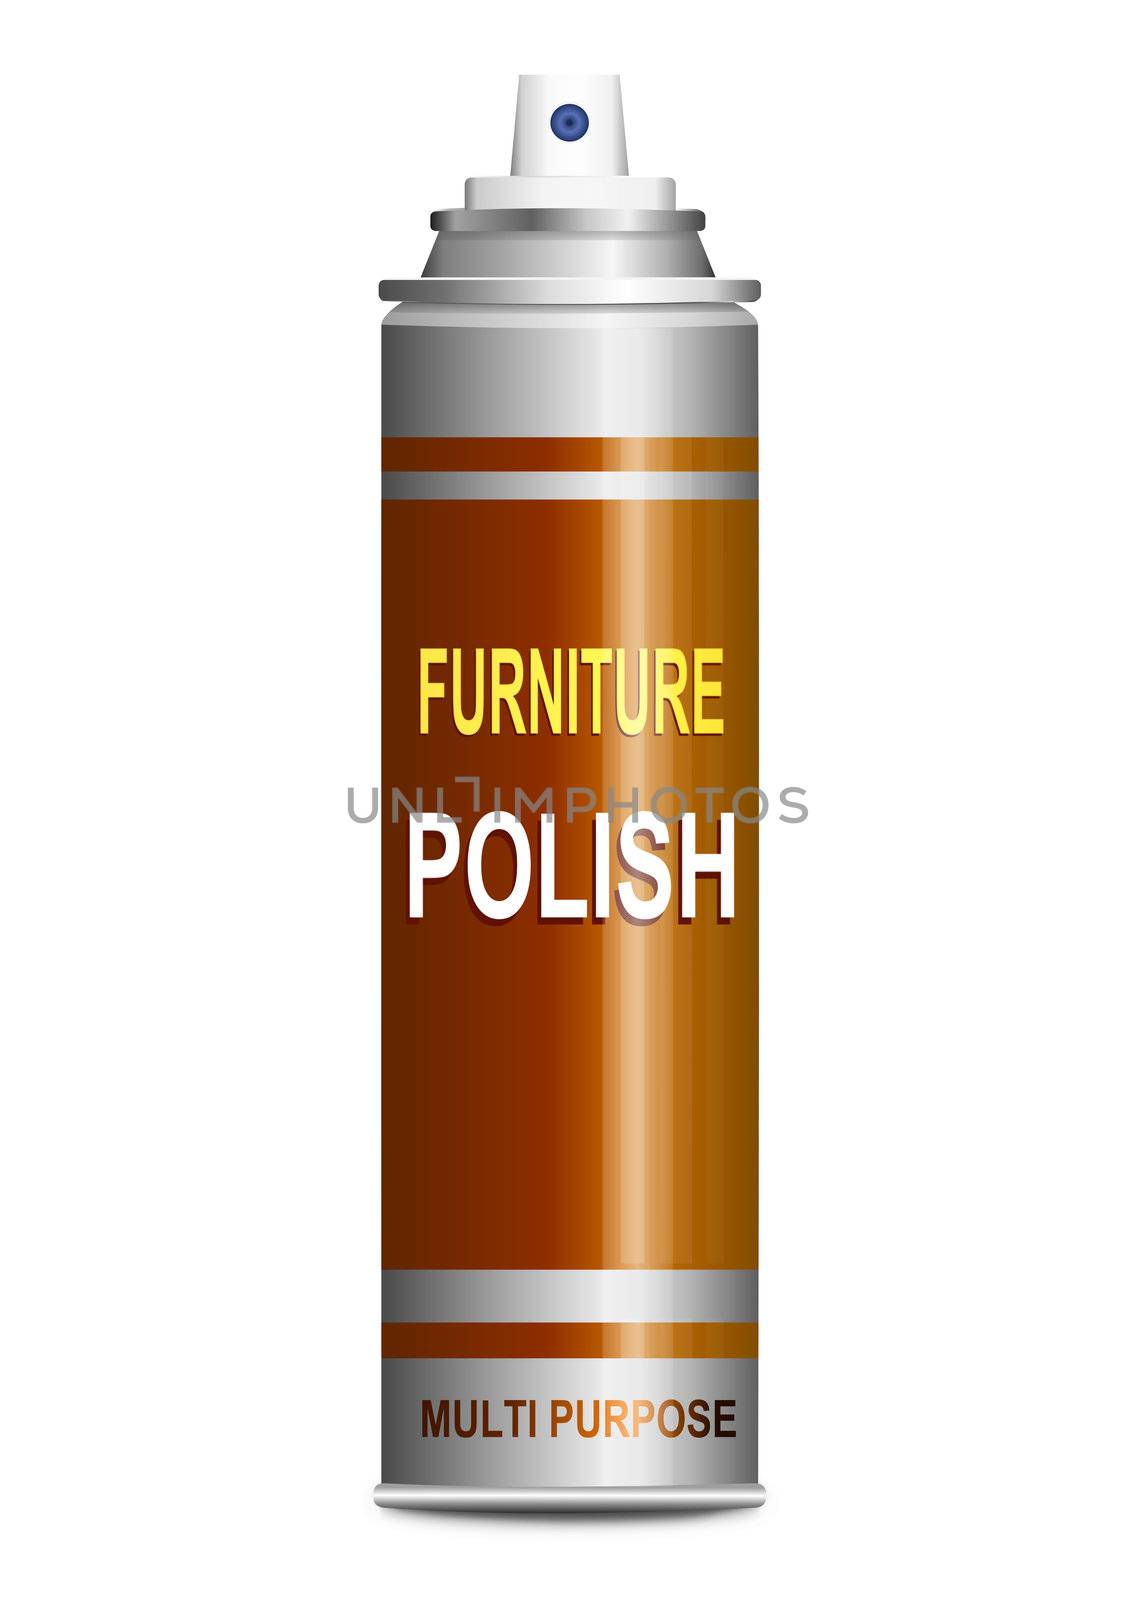 Furniture polish. by 72soul